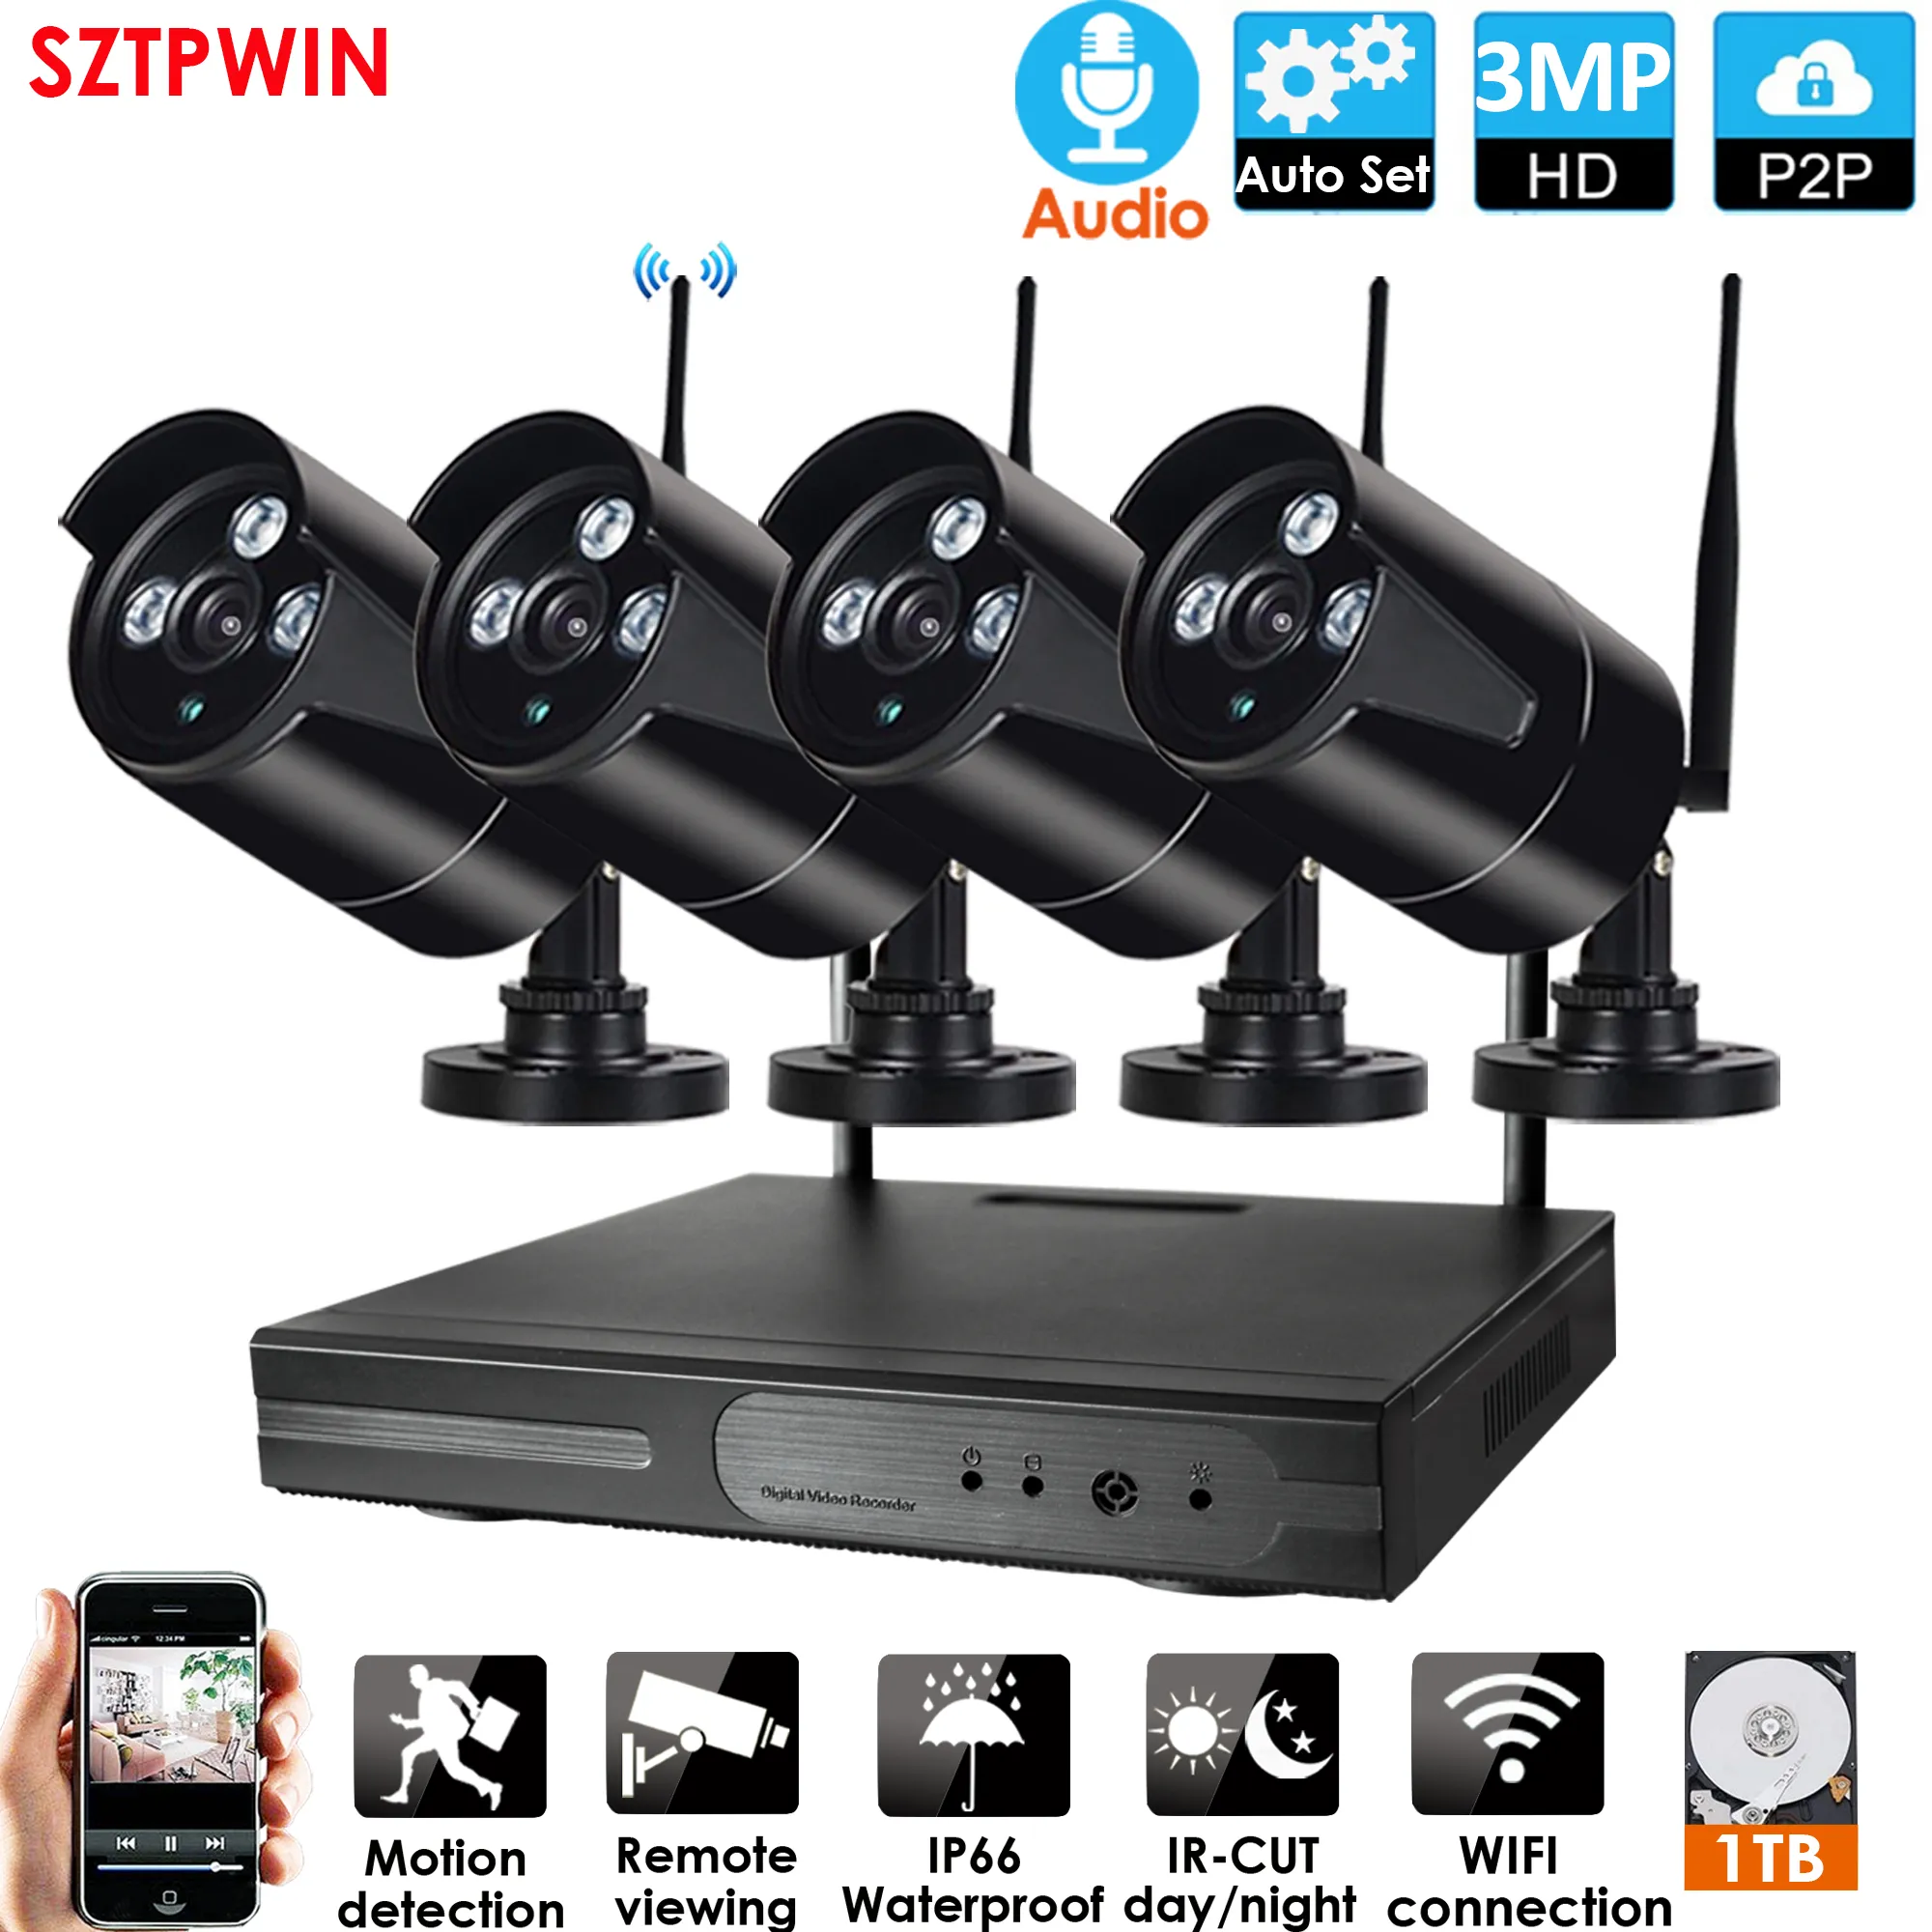 4CH 3.0MP plug in&play Audio CCTV System Wireless 1080P NVR 4PCS 3.0MP IR Outdoor P2P Wifi IP CCTV Security Camera System Surveillance Kit